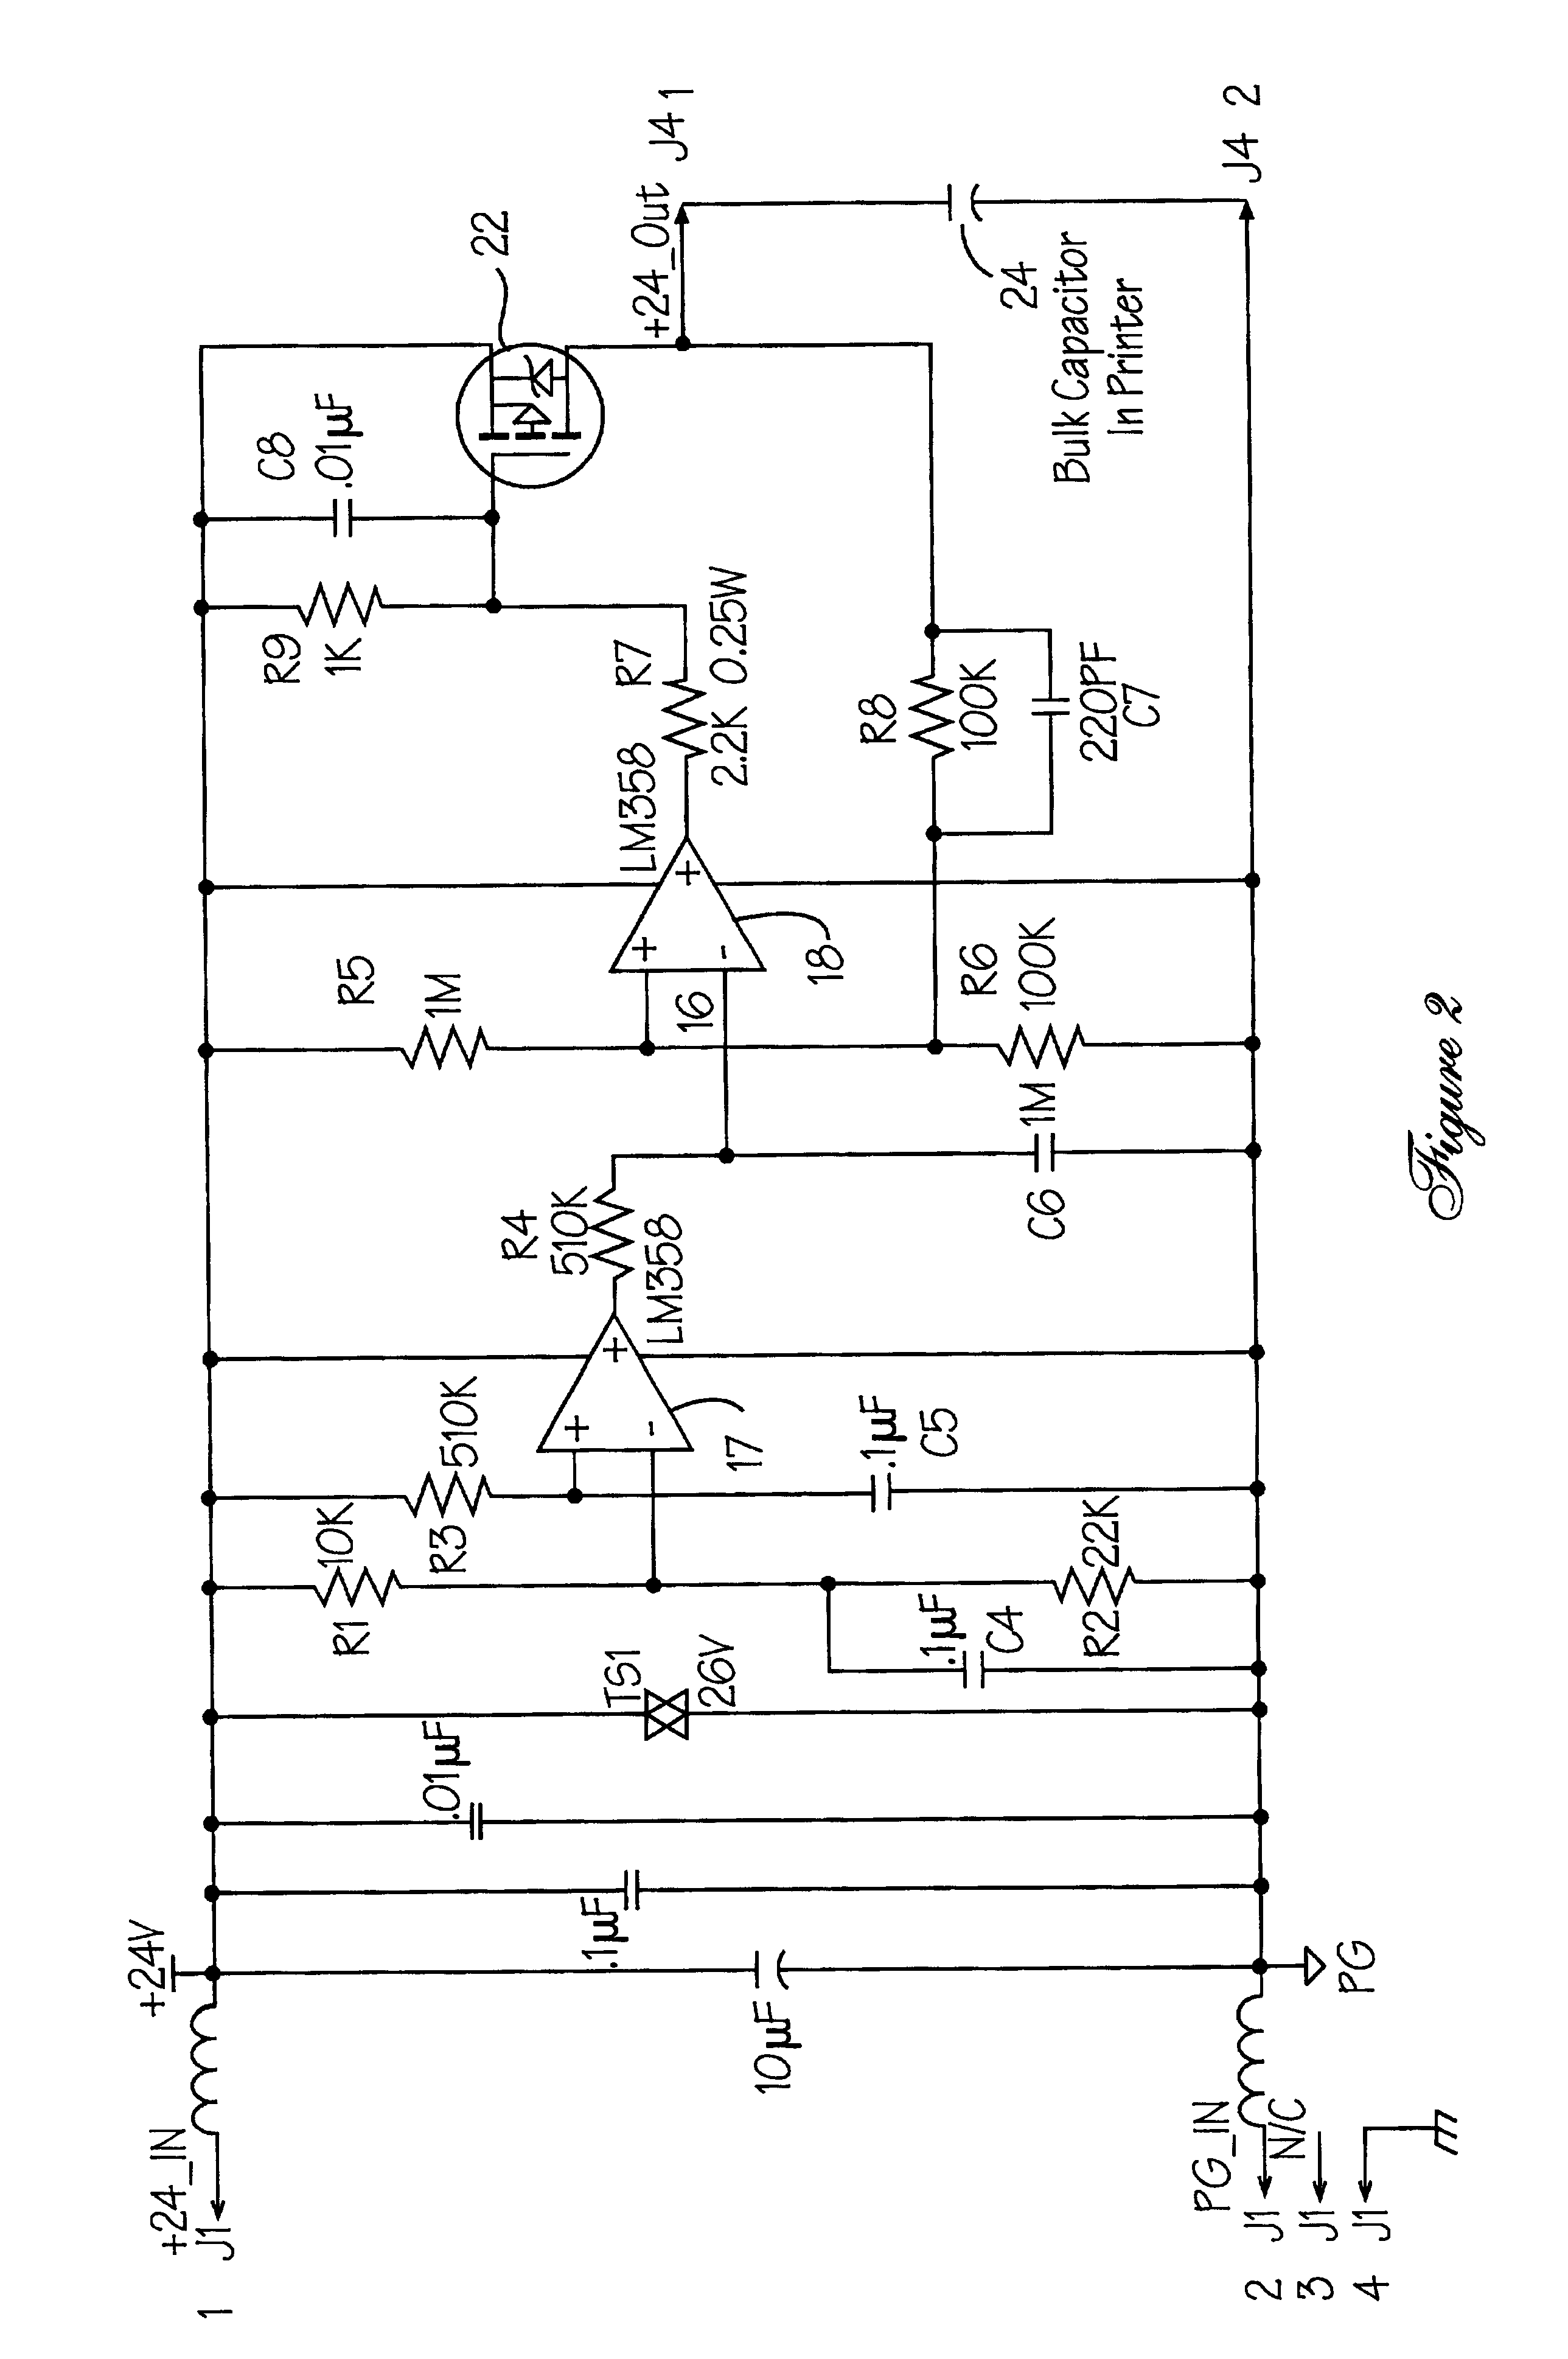 Current inrush limiting circuit